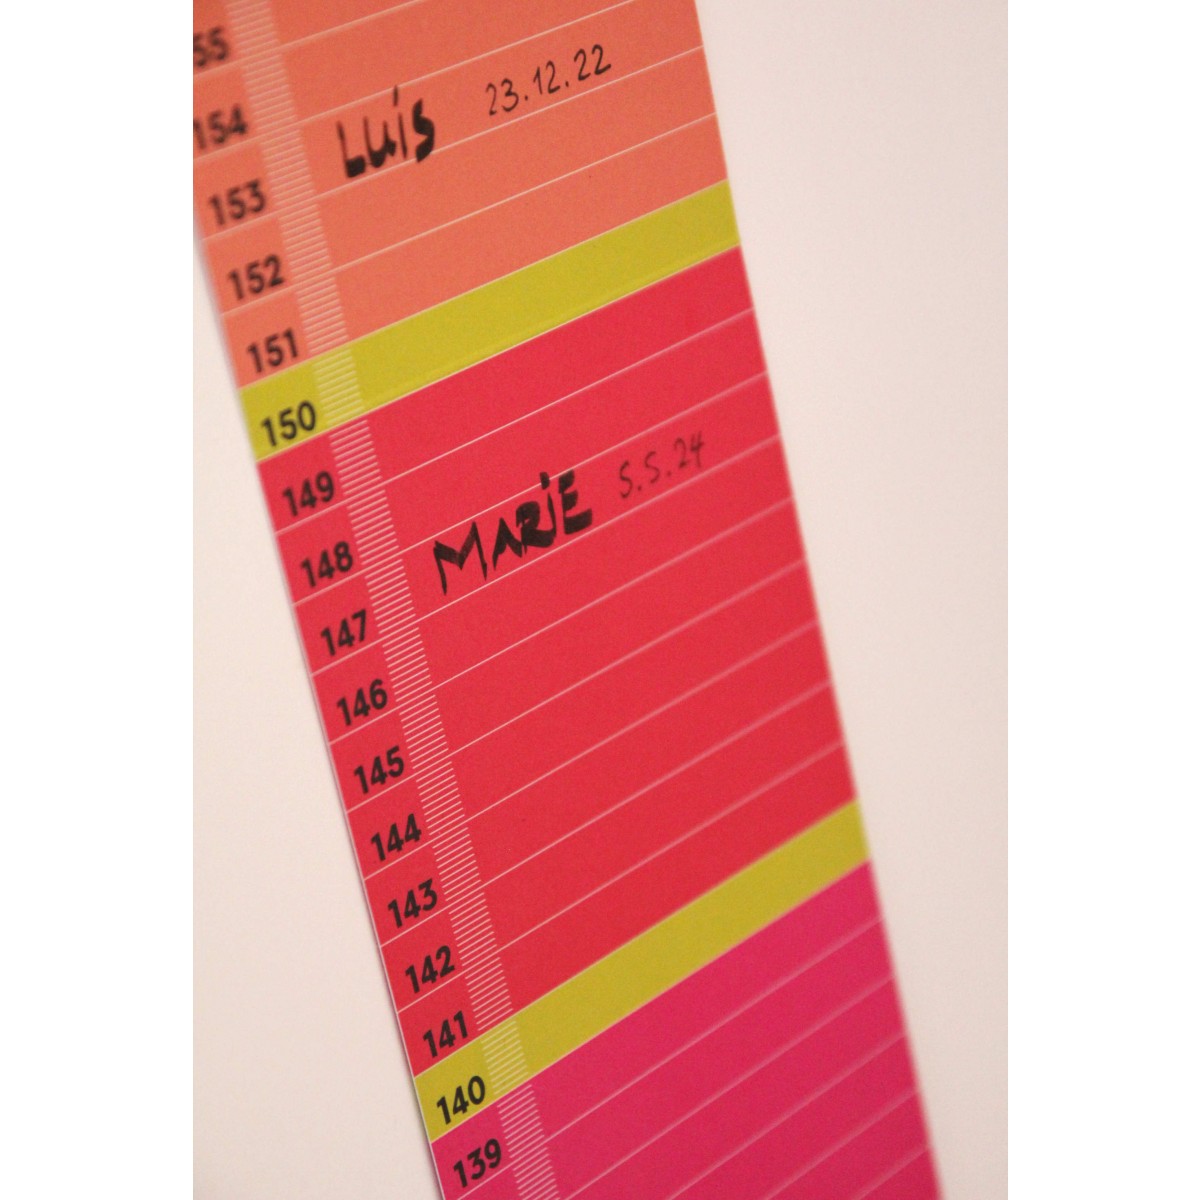 Minimalistische Design-Messlatte „mannometer“ | 70 bis 190 cm | Variante „rosa-pink“ | beidseitig bedruckt | 100% Recyclingpapier | Wi-La-No